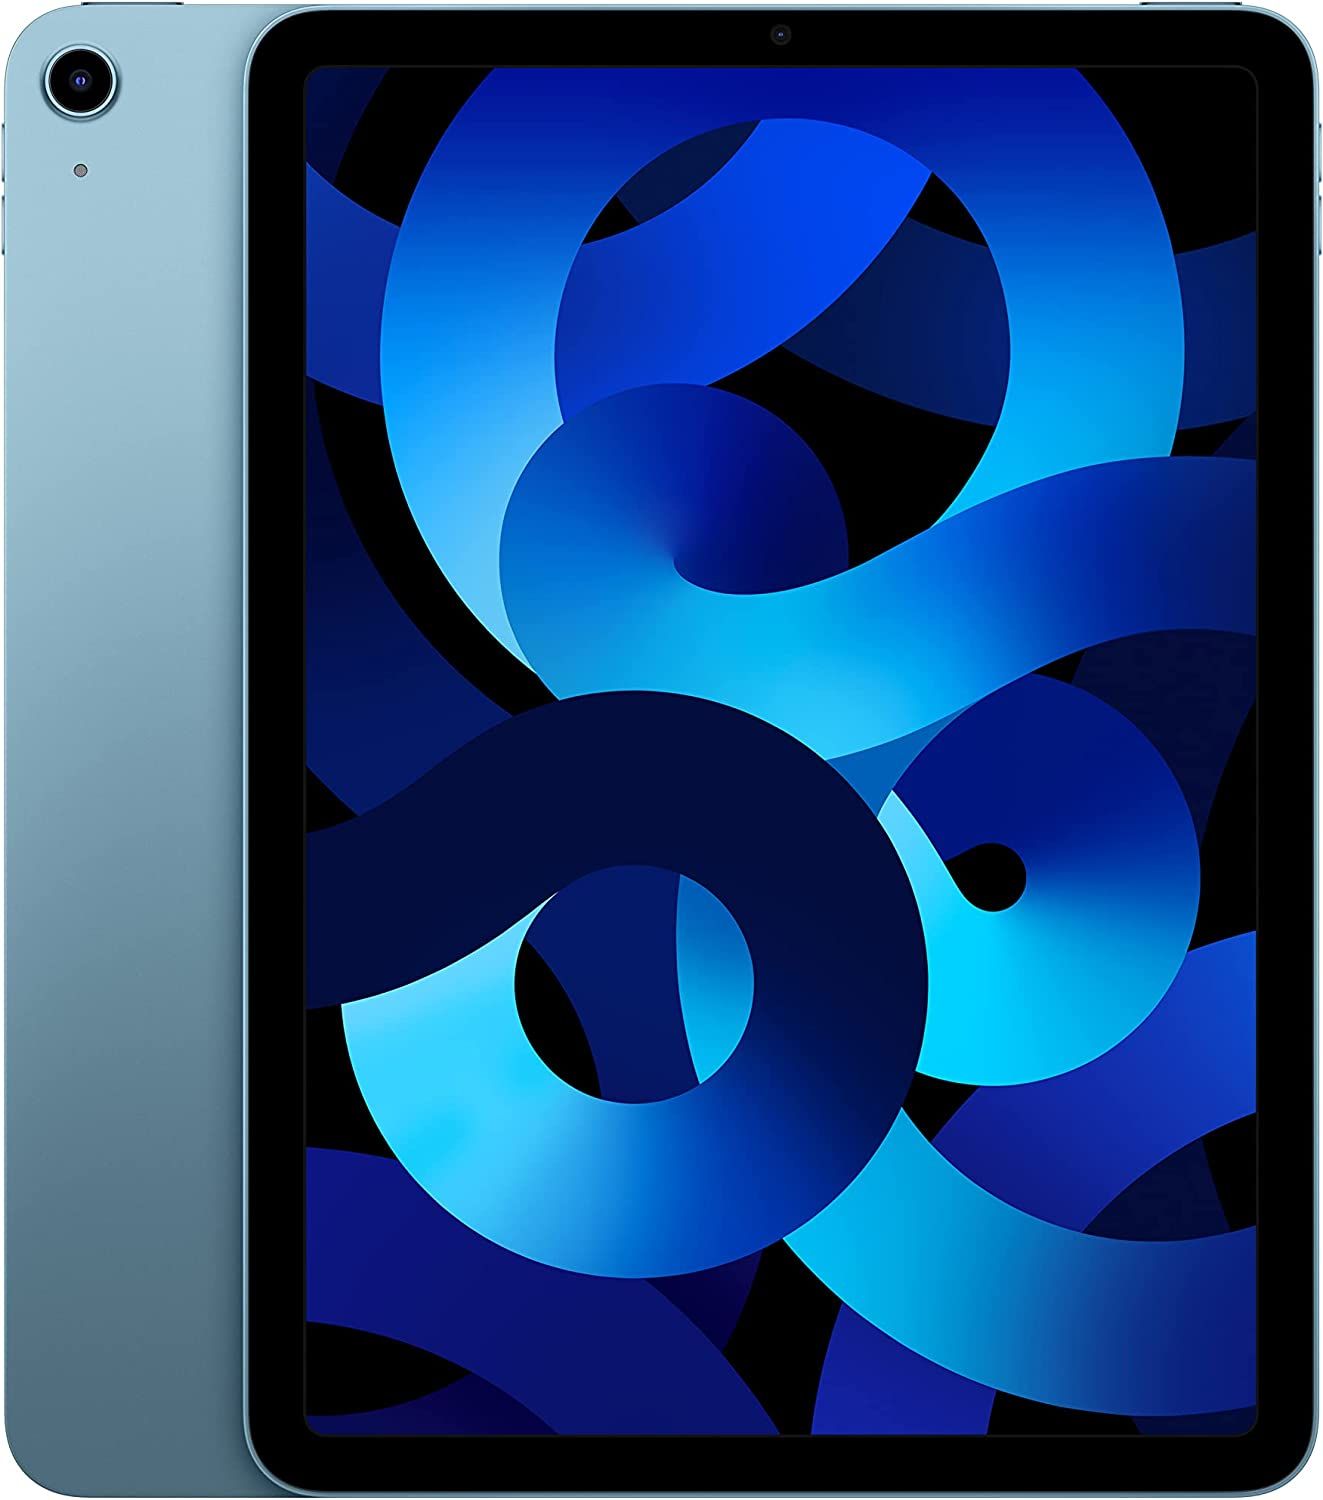  2022 Apple iPad Air (10.9-inch, Wi-Fi, 64GB) - Blue (5th Generation)